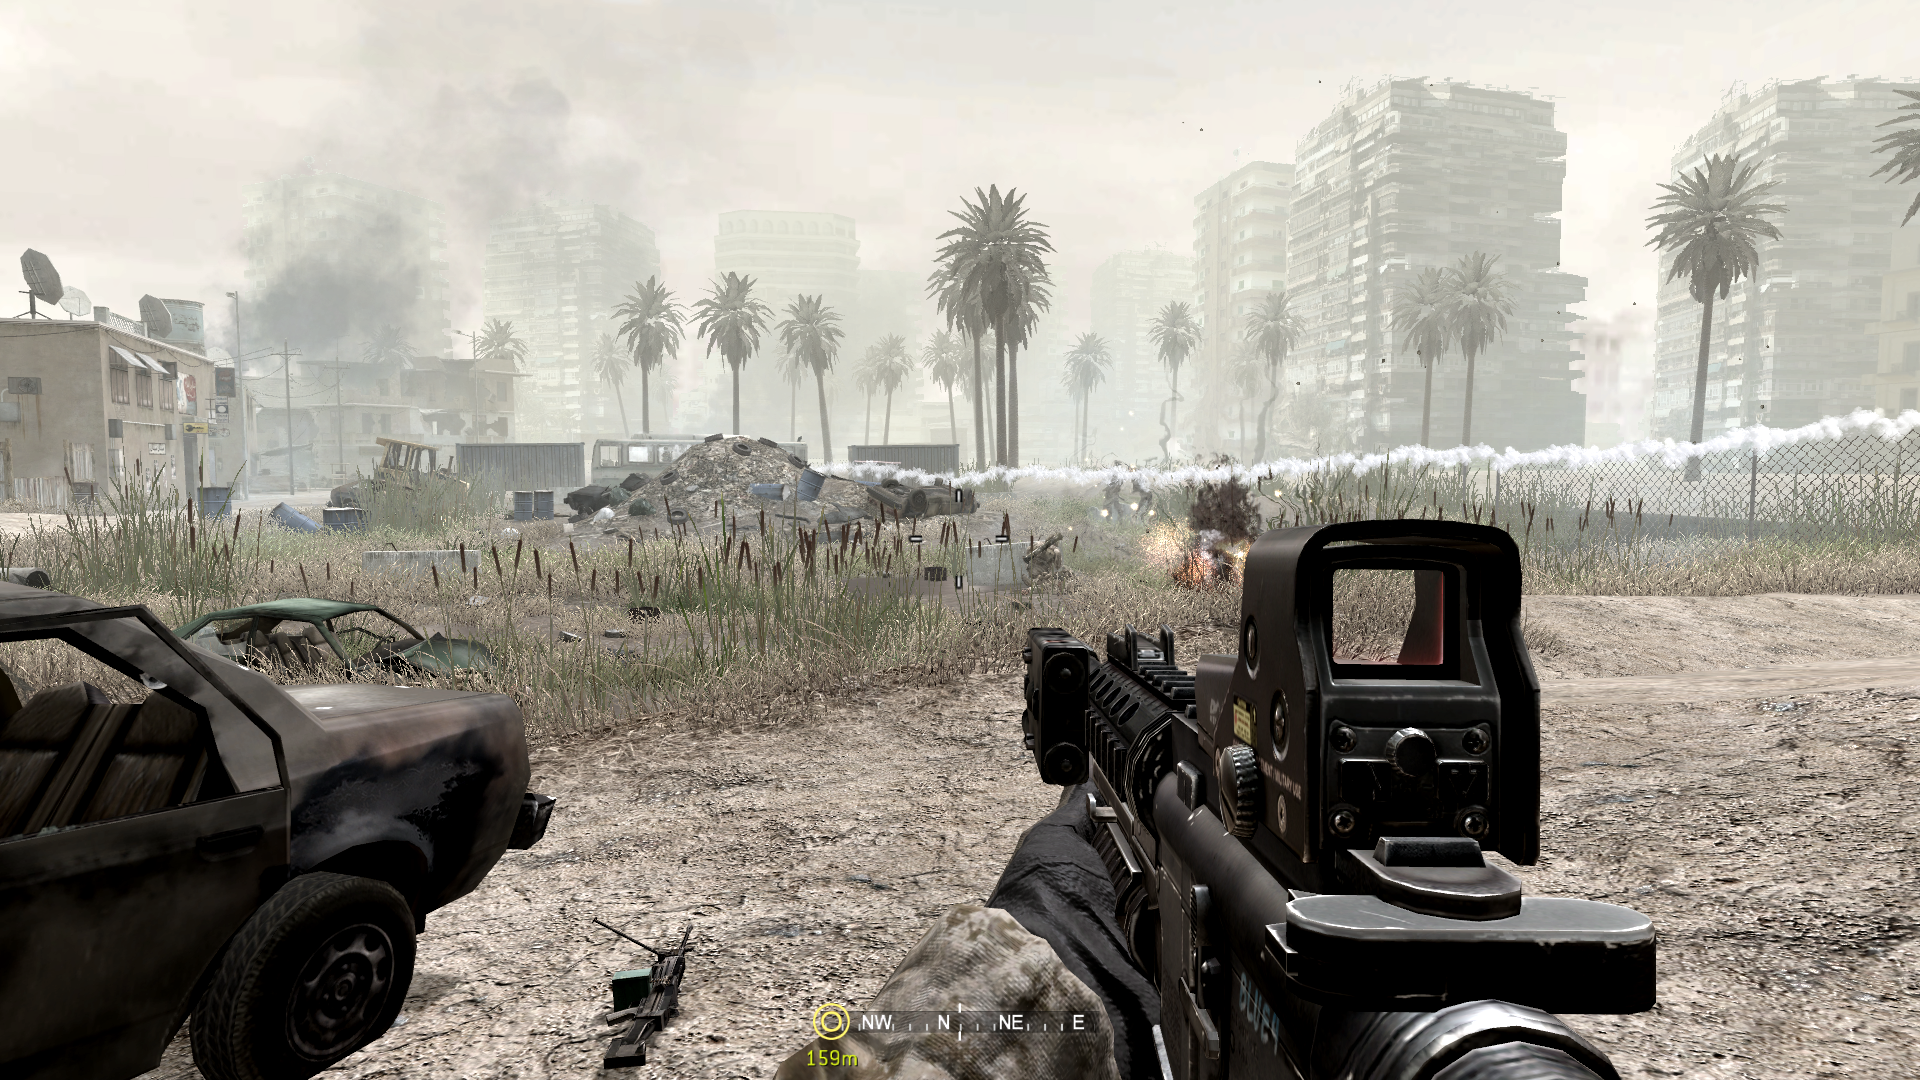 Калов дьюти модерн варфаер 2 купить. Modern Warfare 1. Call of Duty 4 Modern Warfare. Калл оф дьюти MW 1. Колоу дьюти 4 Модерн варфеир.